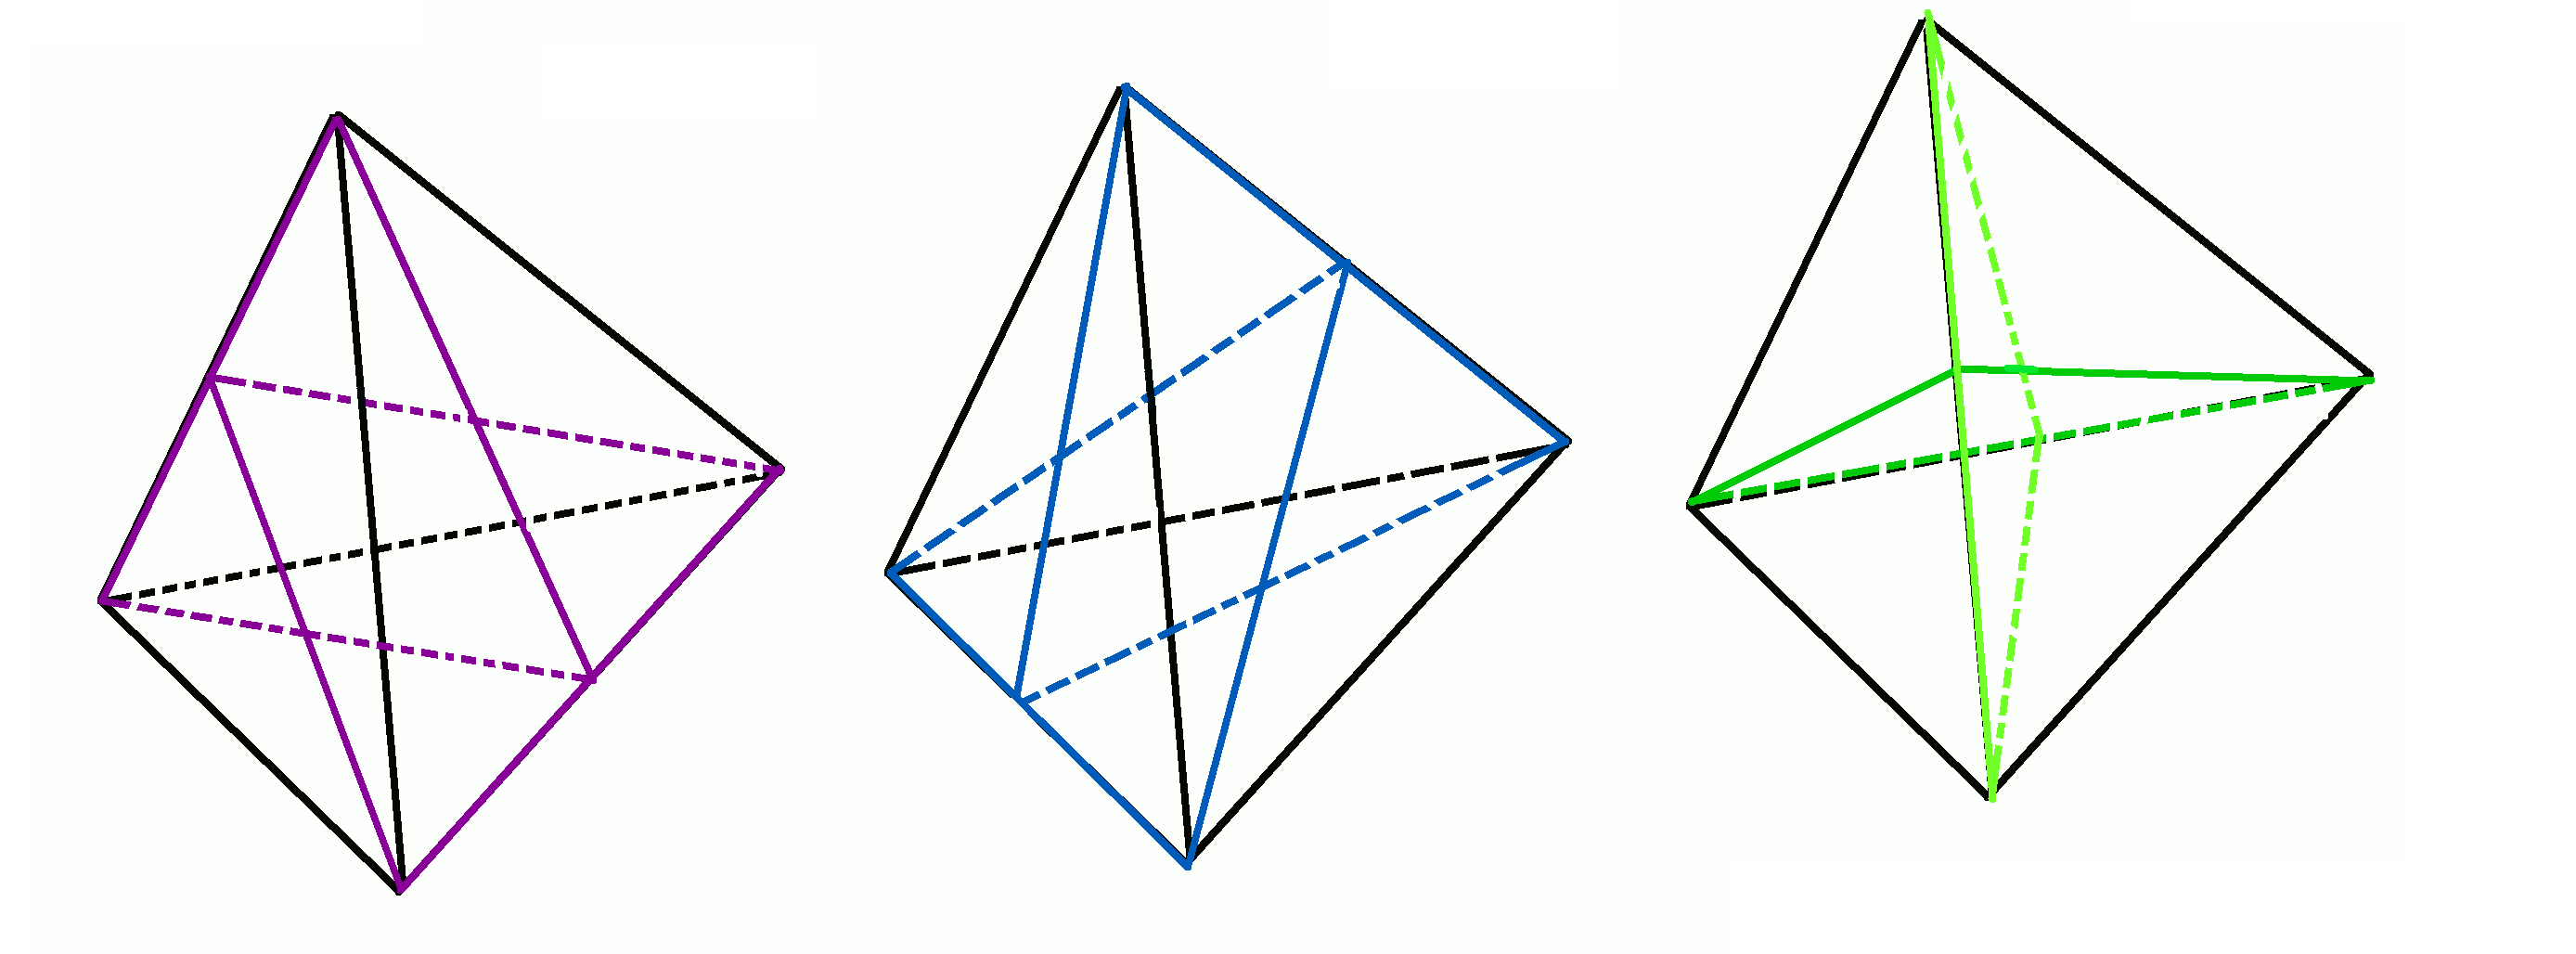 Центр октаэдра. Оси симметрии тетраэдра. Плоскость симметрии правильного тетраэдра. Плоскости симметрии тетраэдра. Элементы симметрии правильного октаэдра.